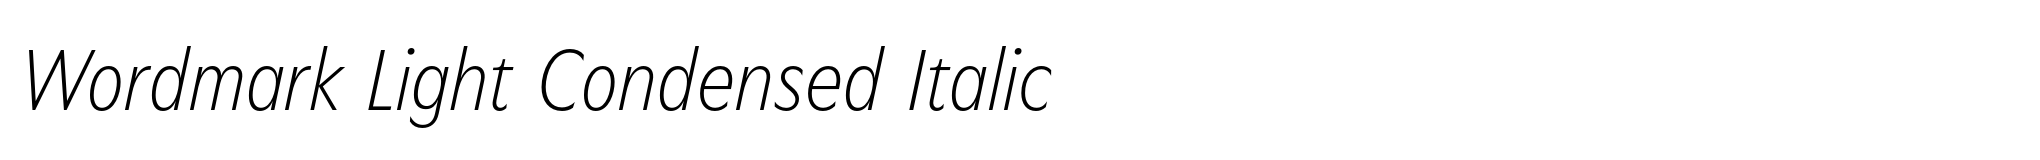 Wordmark Light Condensed Italic image